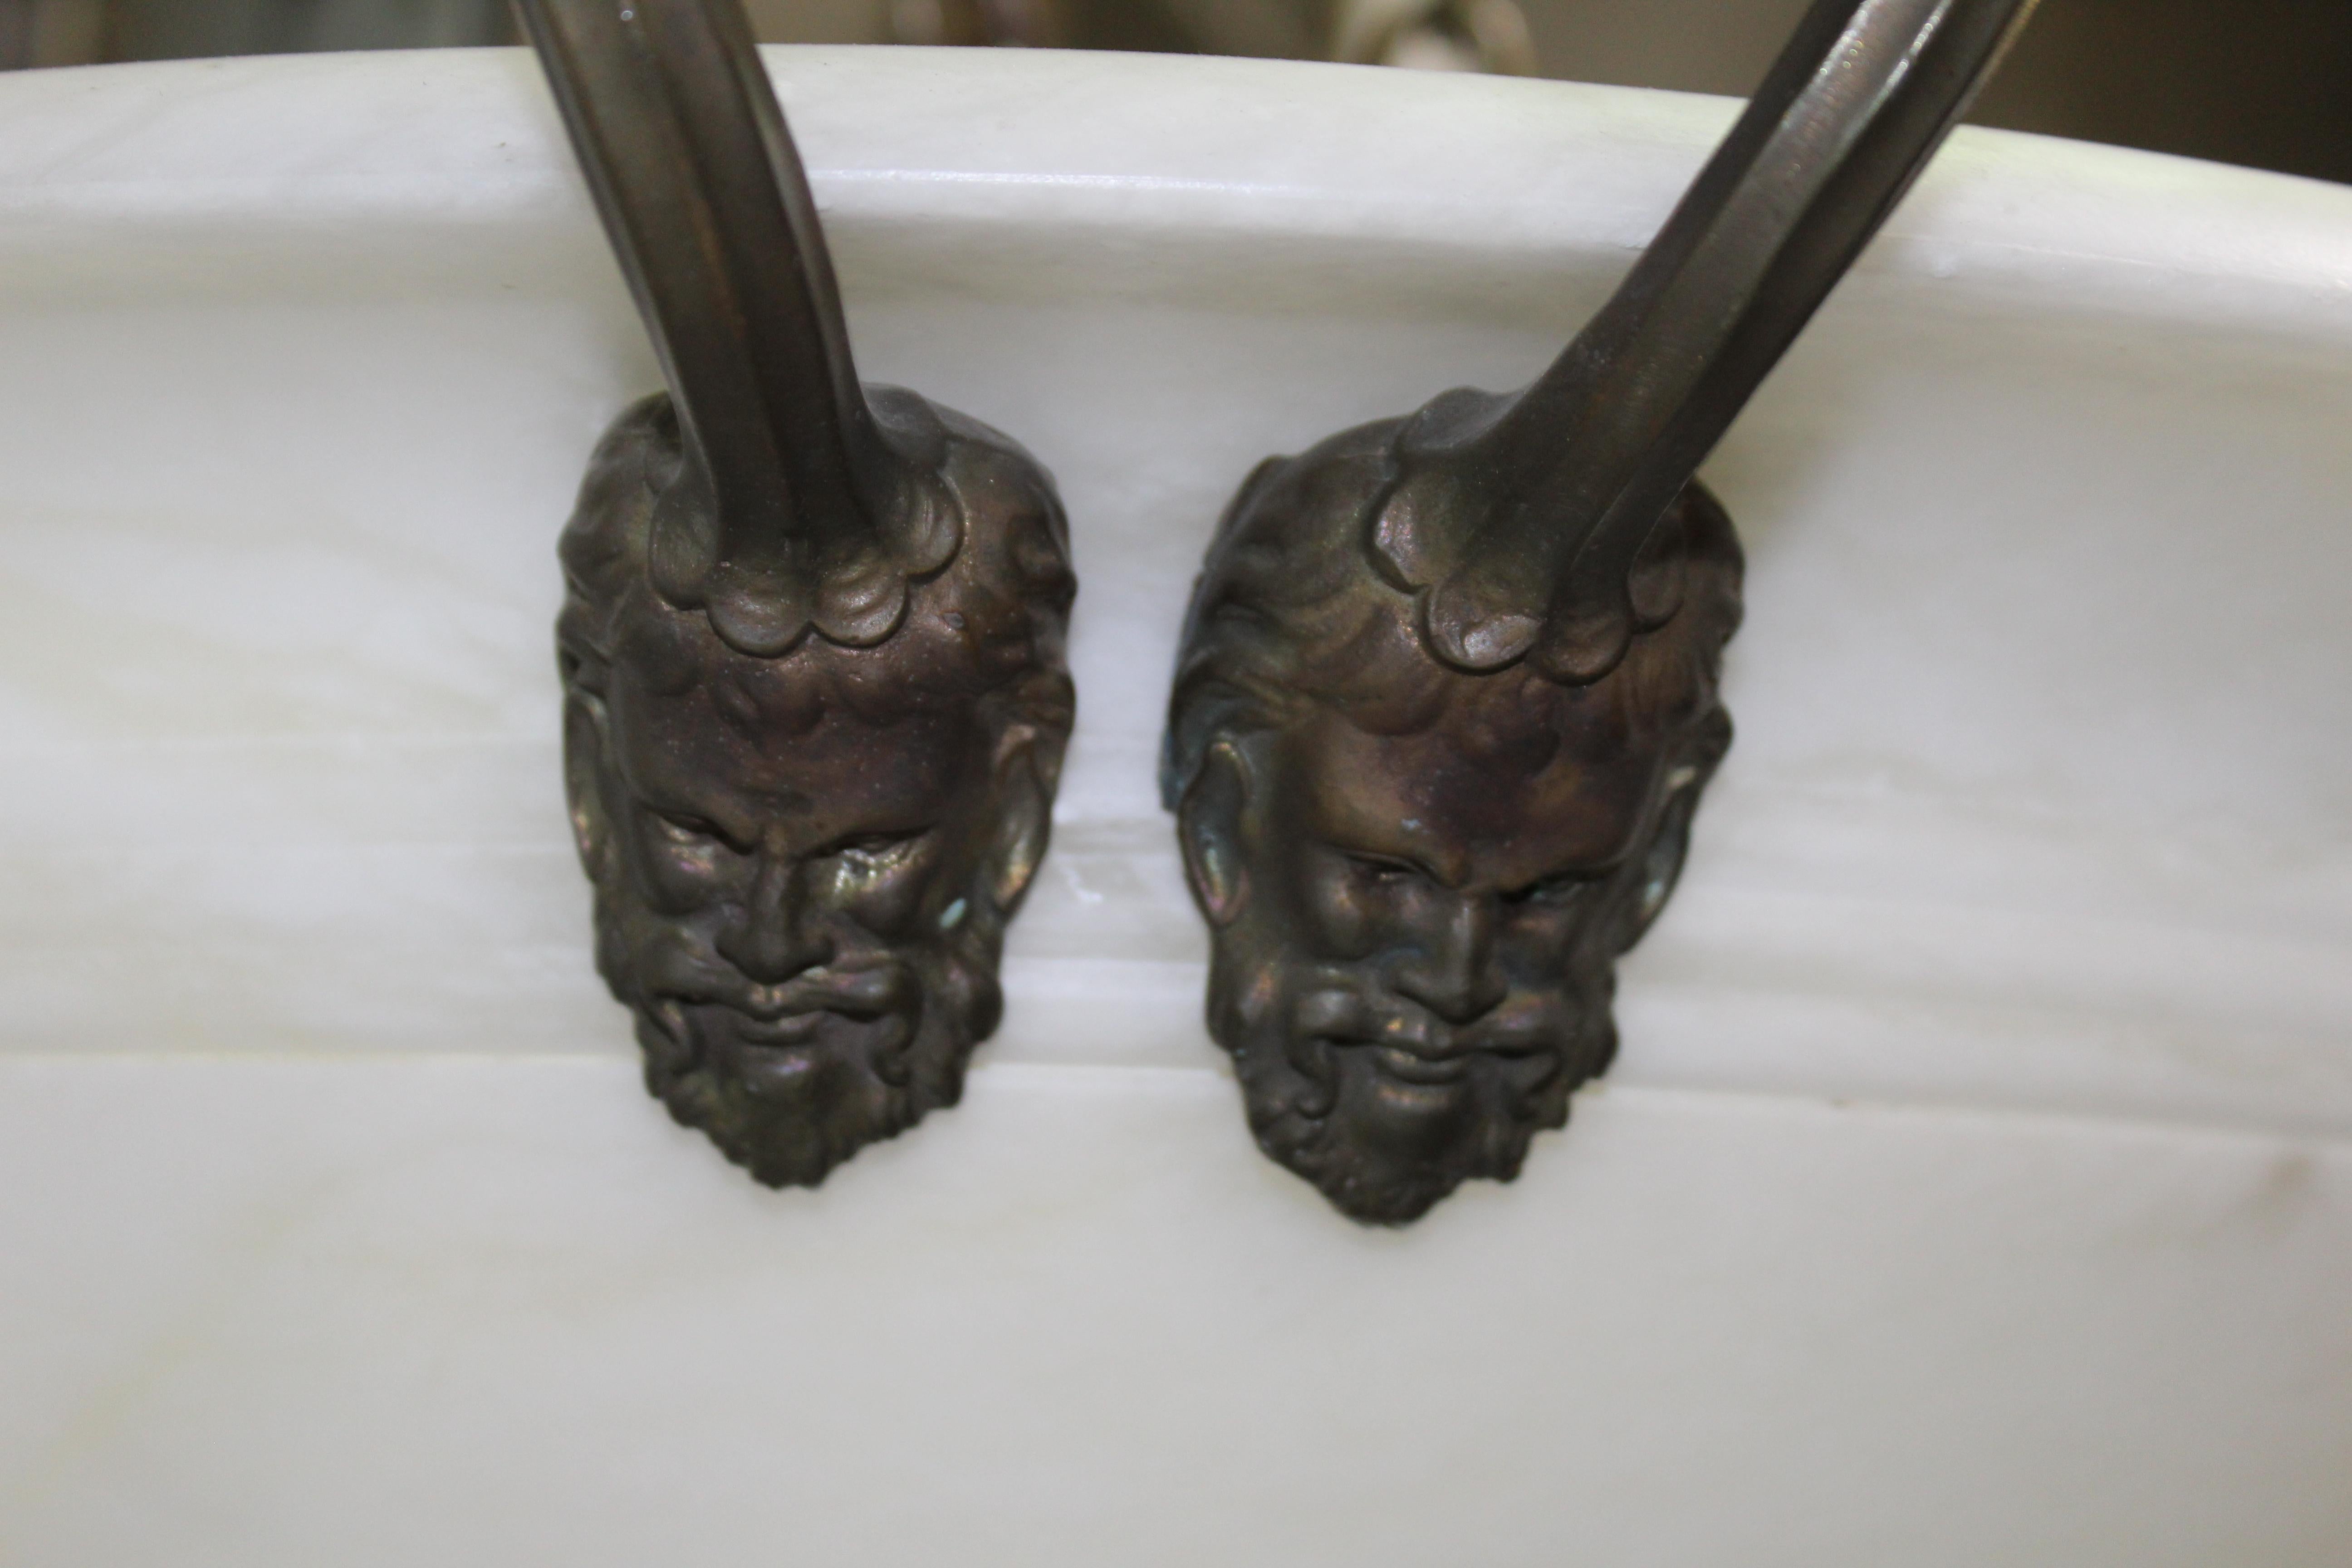 Gothic Italian Chandelier Alabaster Bronze Hardware, Men's Faces